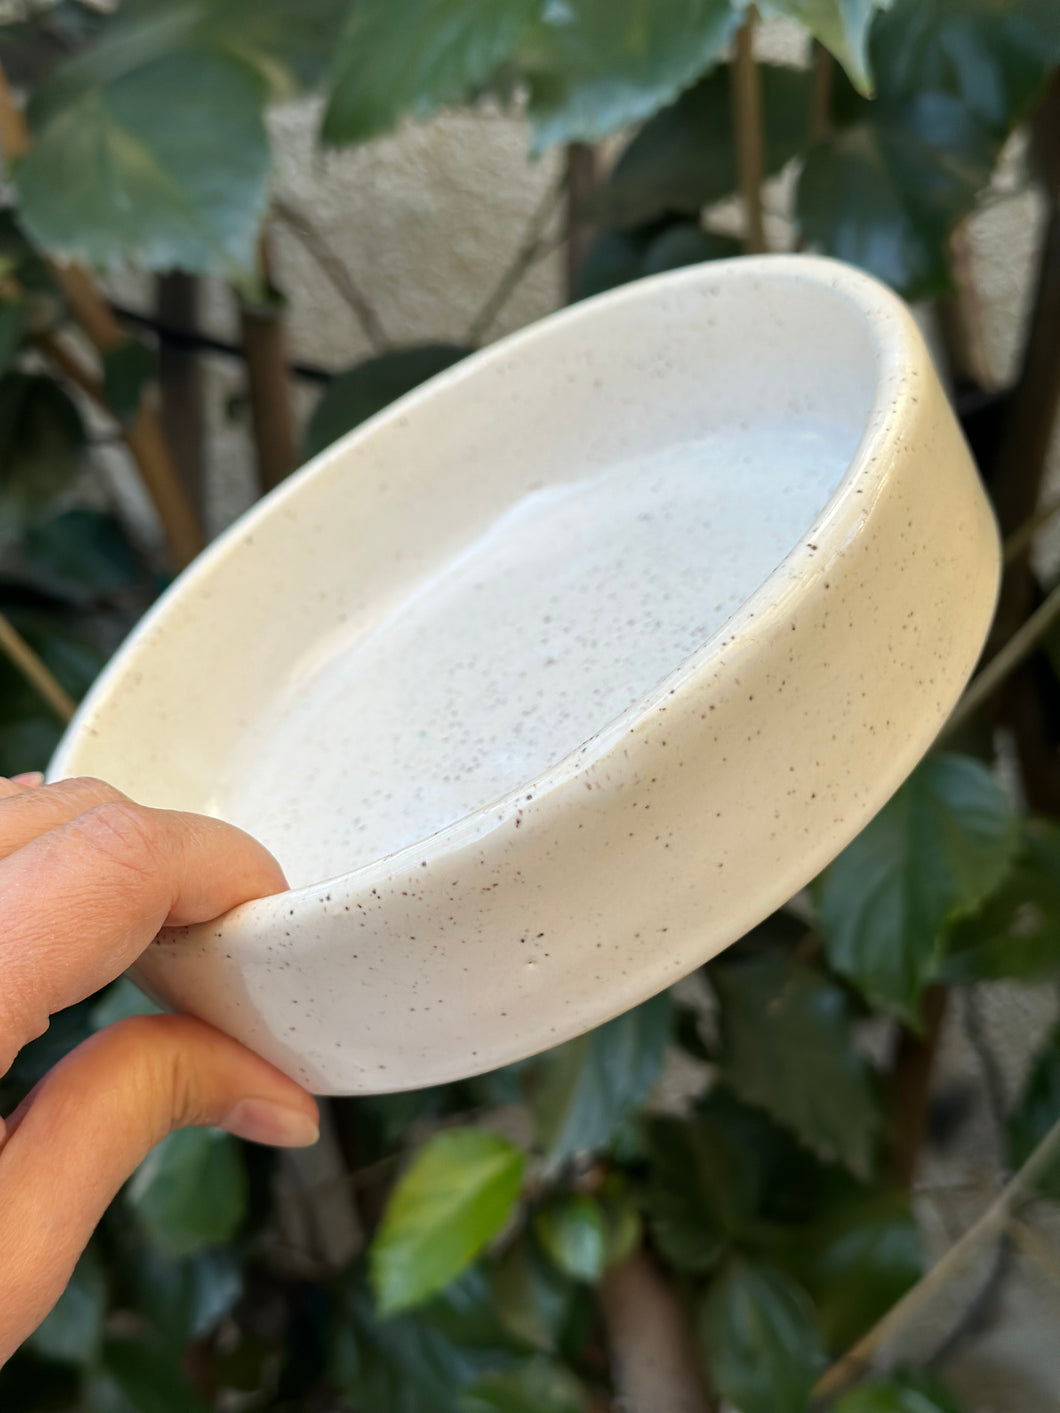 Ceramic Pet Bowl